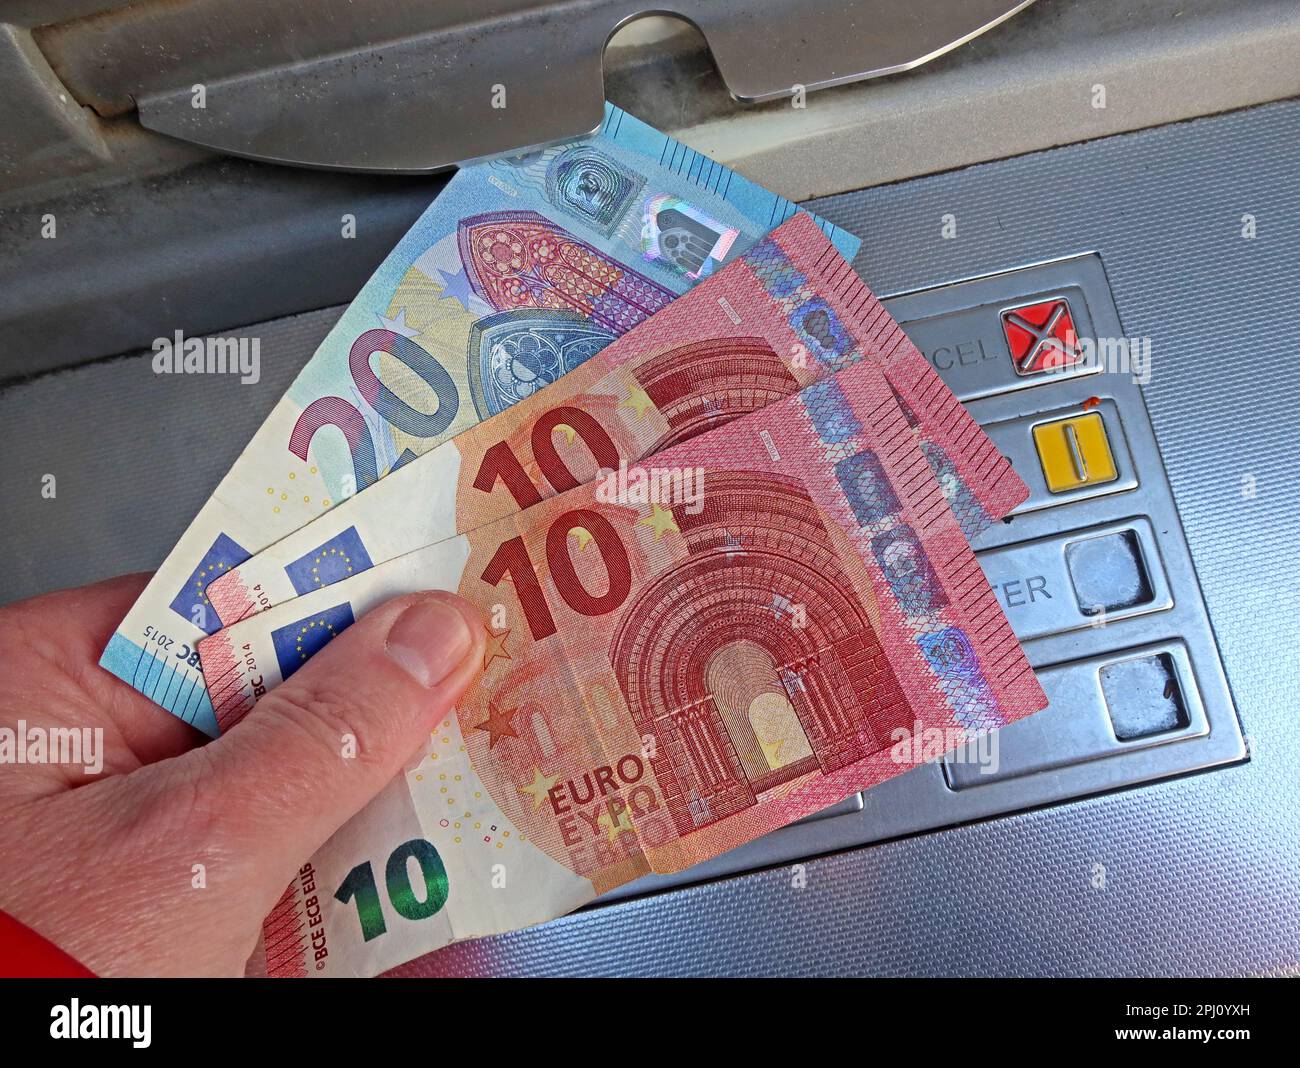 EU Euro notes, fresh from a cash machine, Dublin, Eire, Ireland Stock Photo